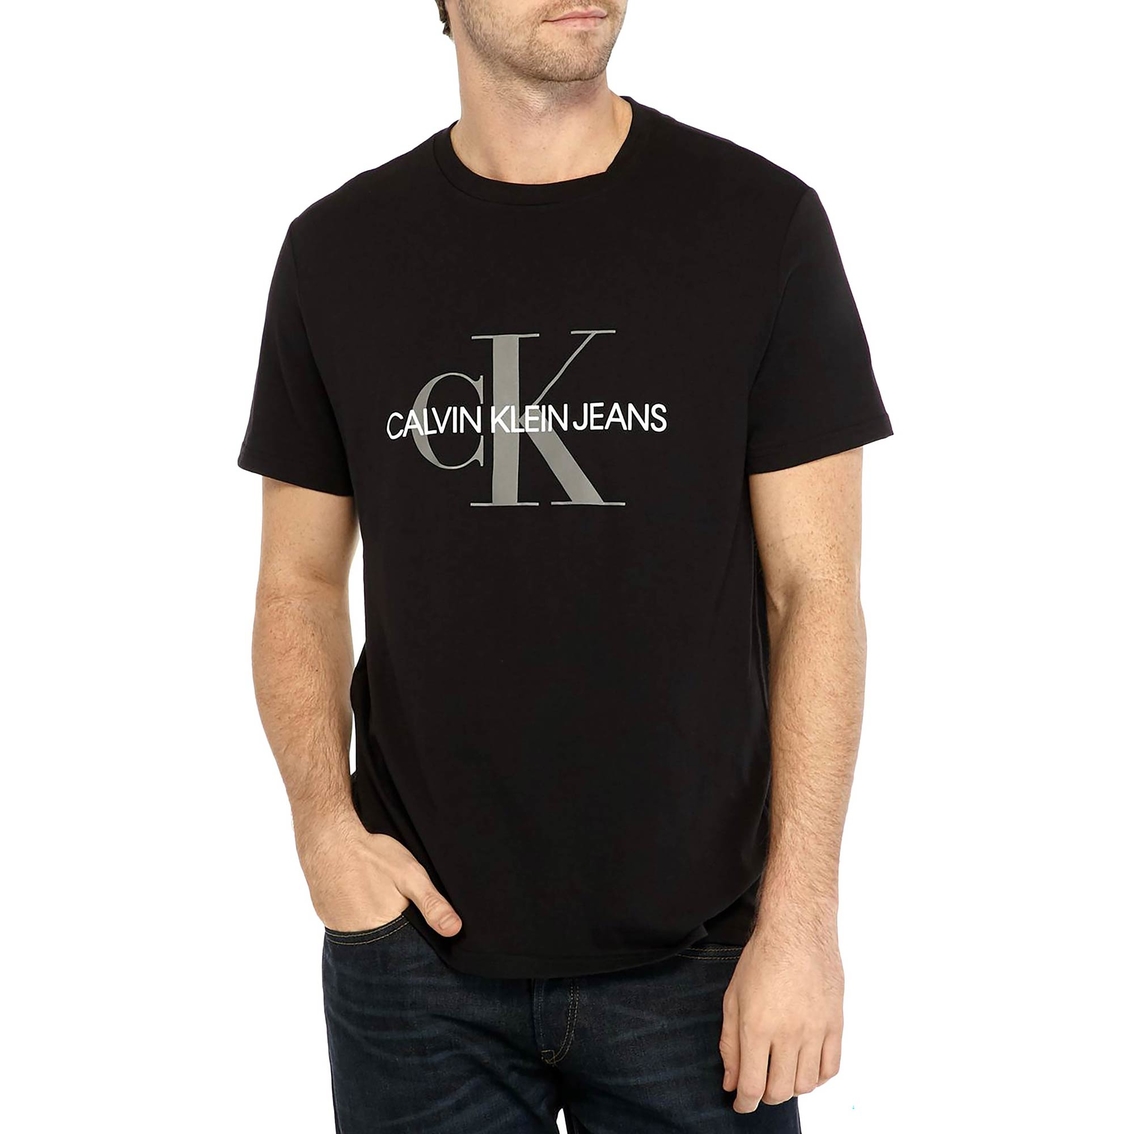 Calvin Klein Jeans Monogram Crew Tee | Shirts | Clothing & Accessories ...